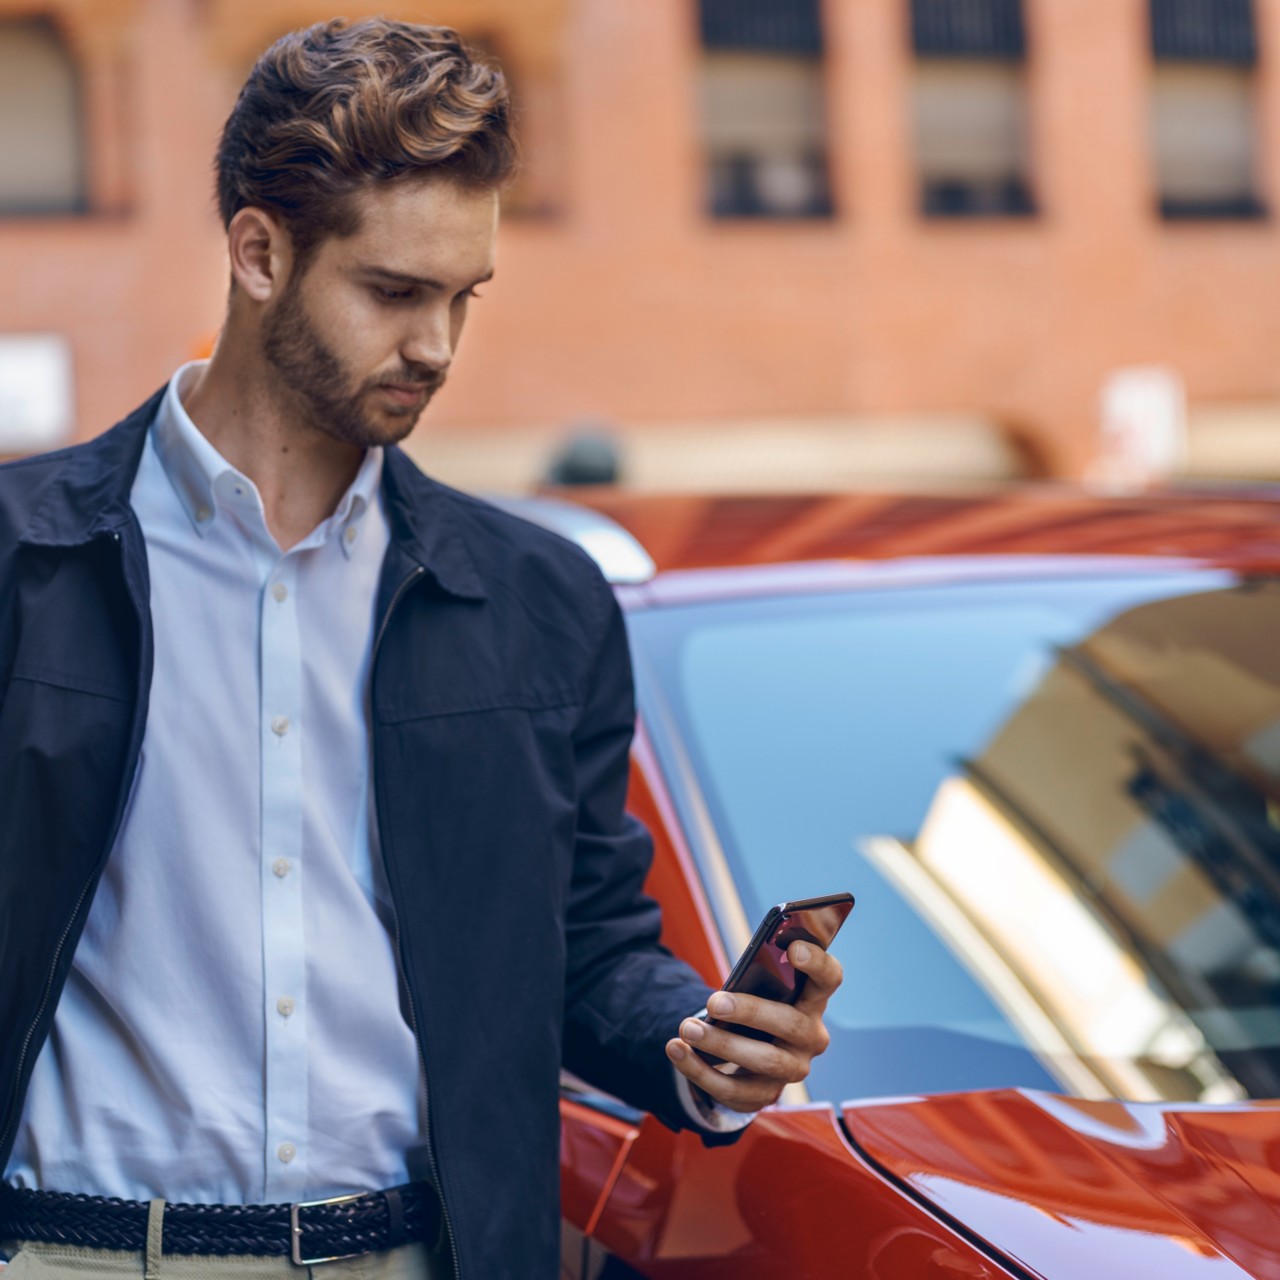 man on mobile phone standing next to Lexus car